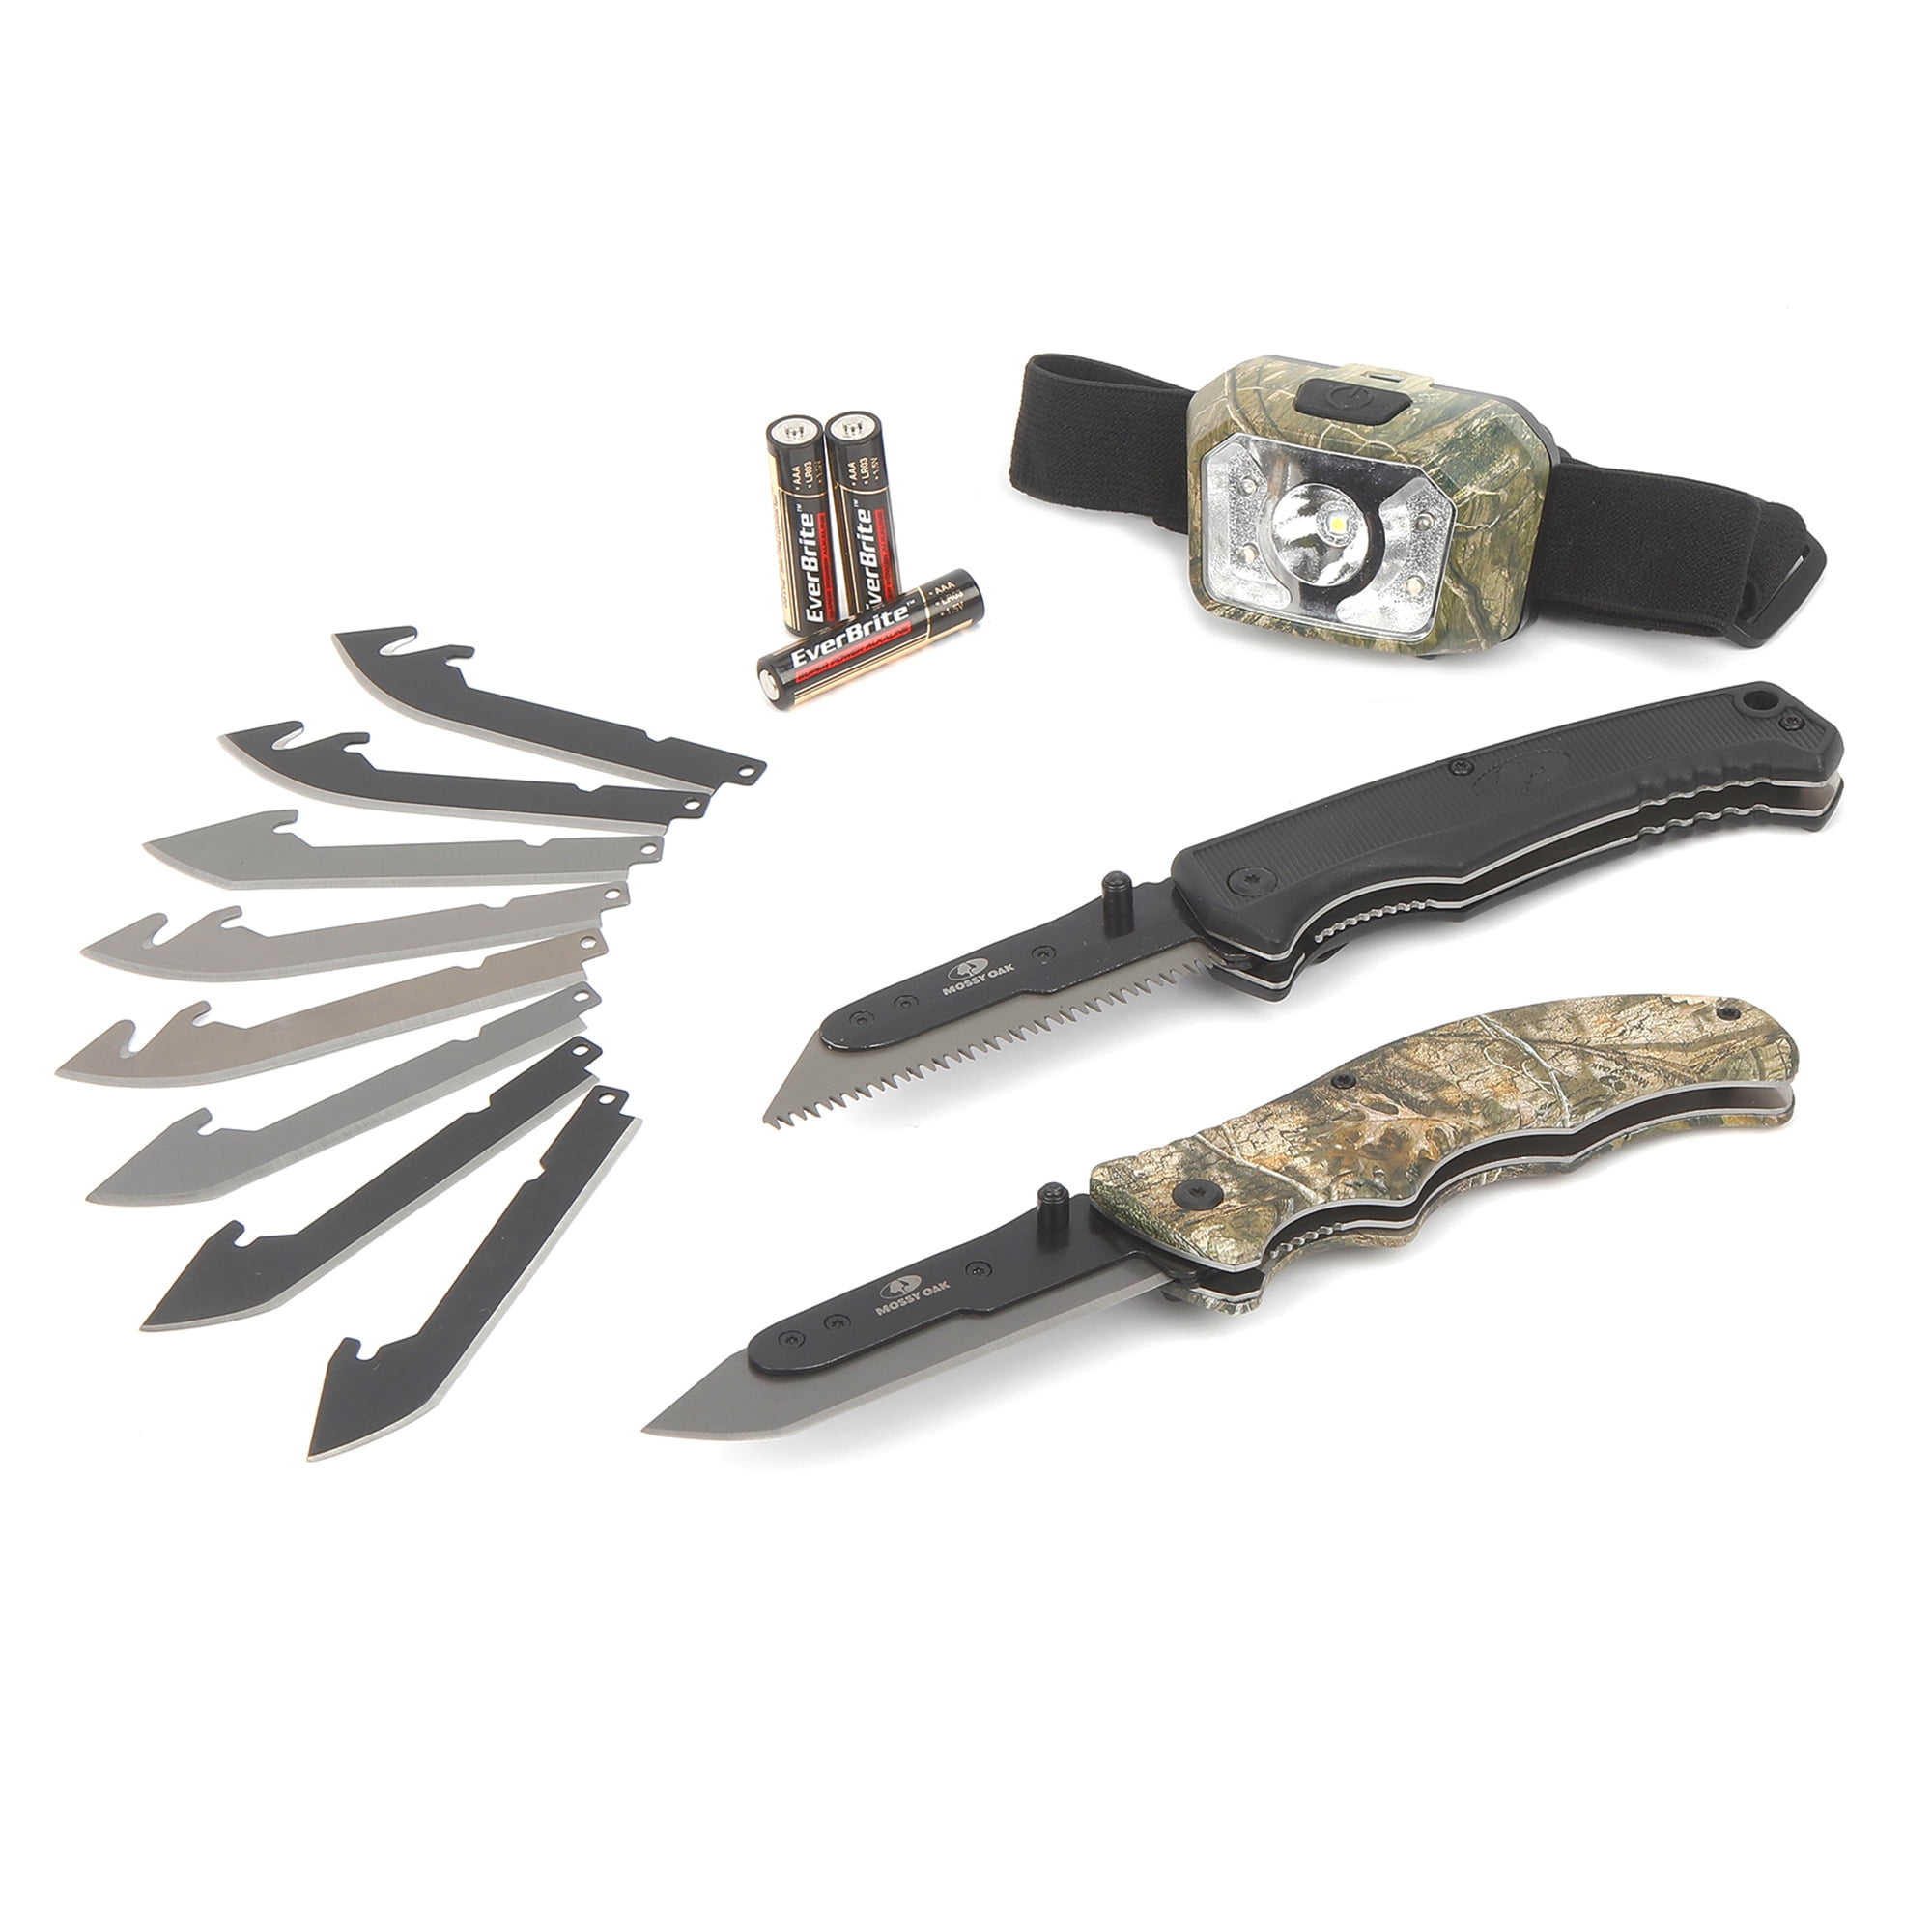 Mossy Oak 3.5" Serrated Tactical Knife $10.98 + Free S&H w/ Walmart+ or $35+